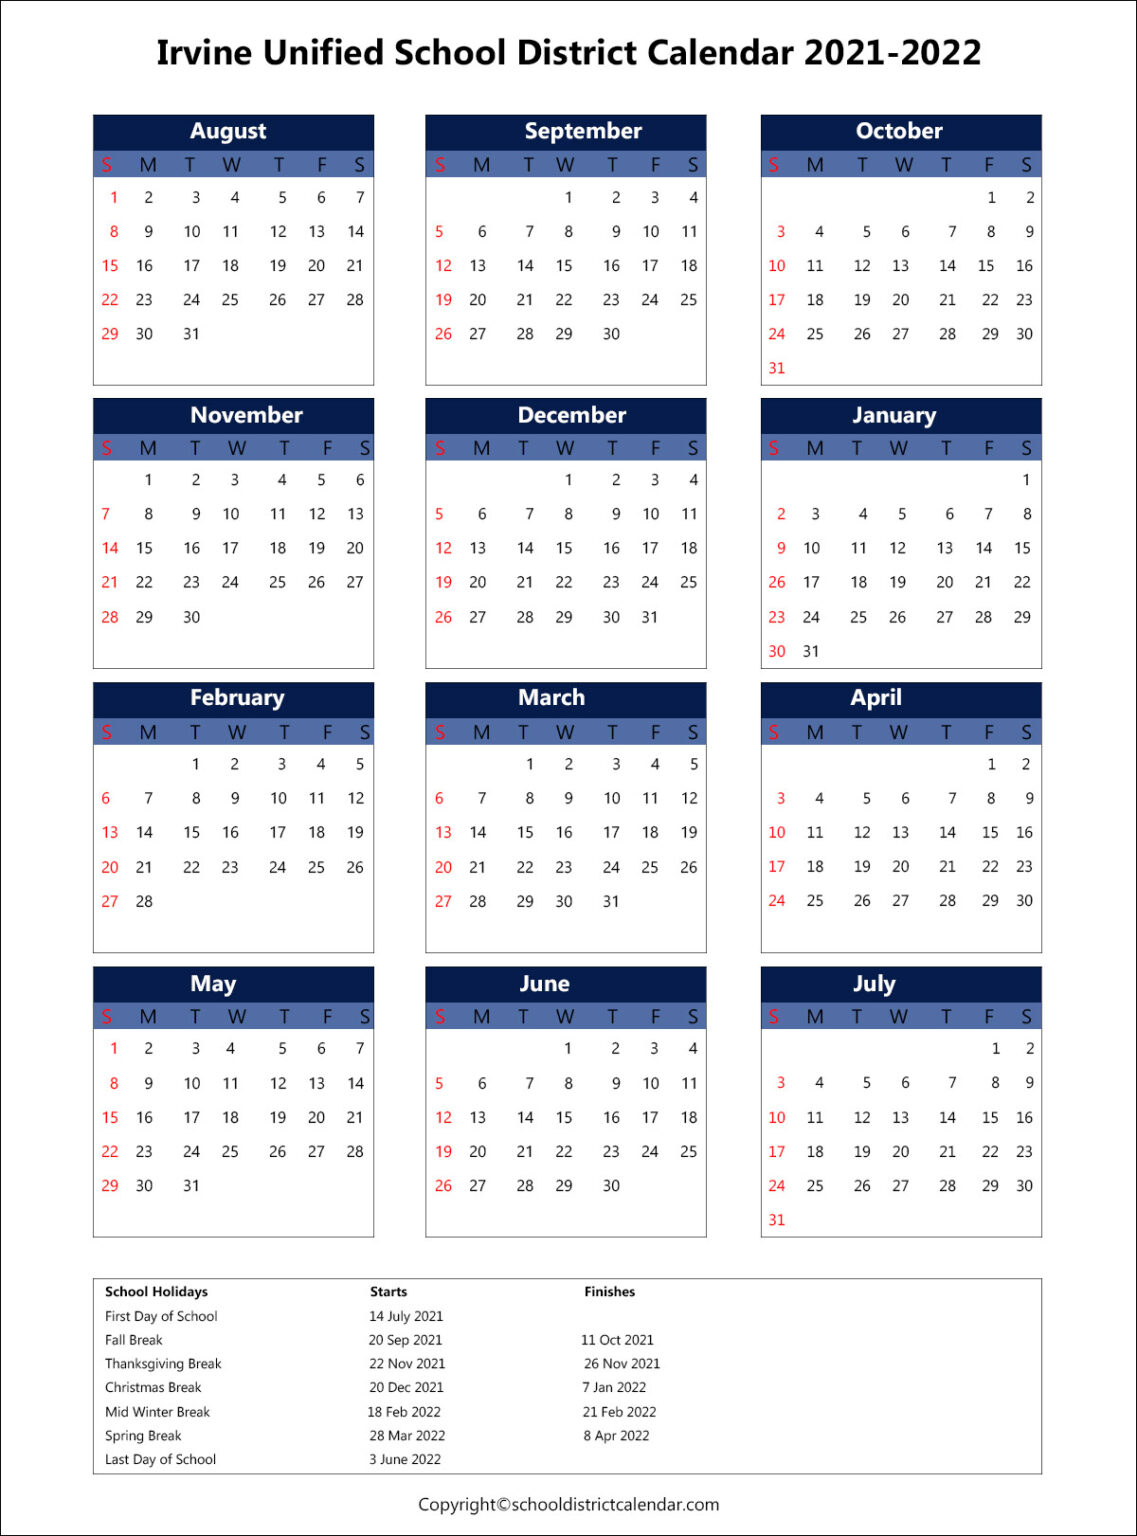 Irvine Unified School District Calendar Holidays 2021-2022